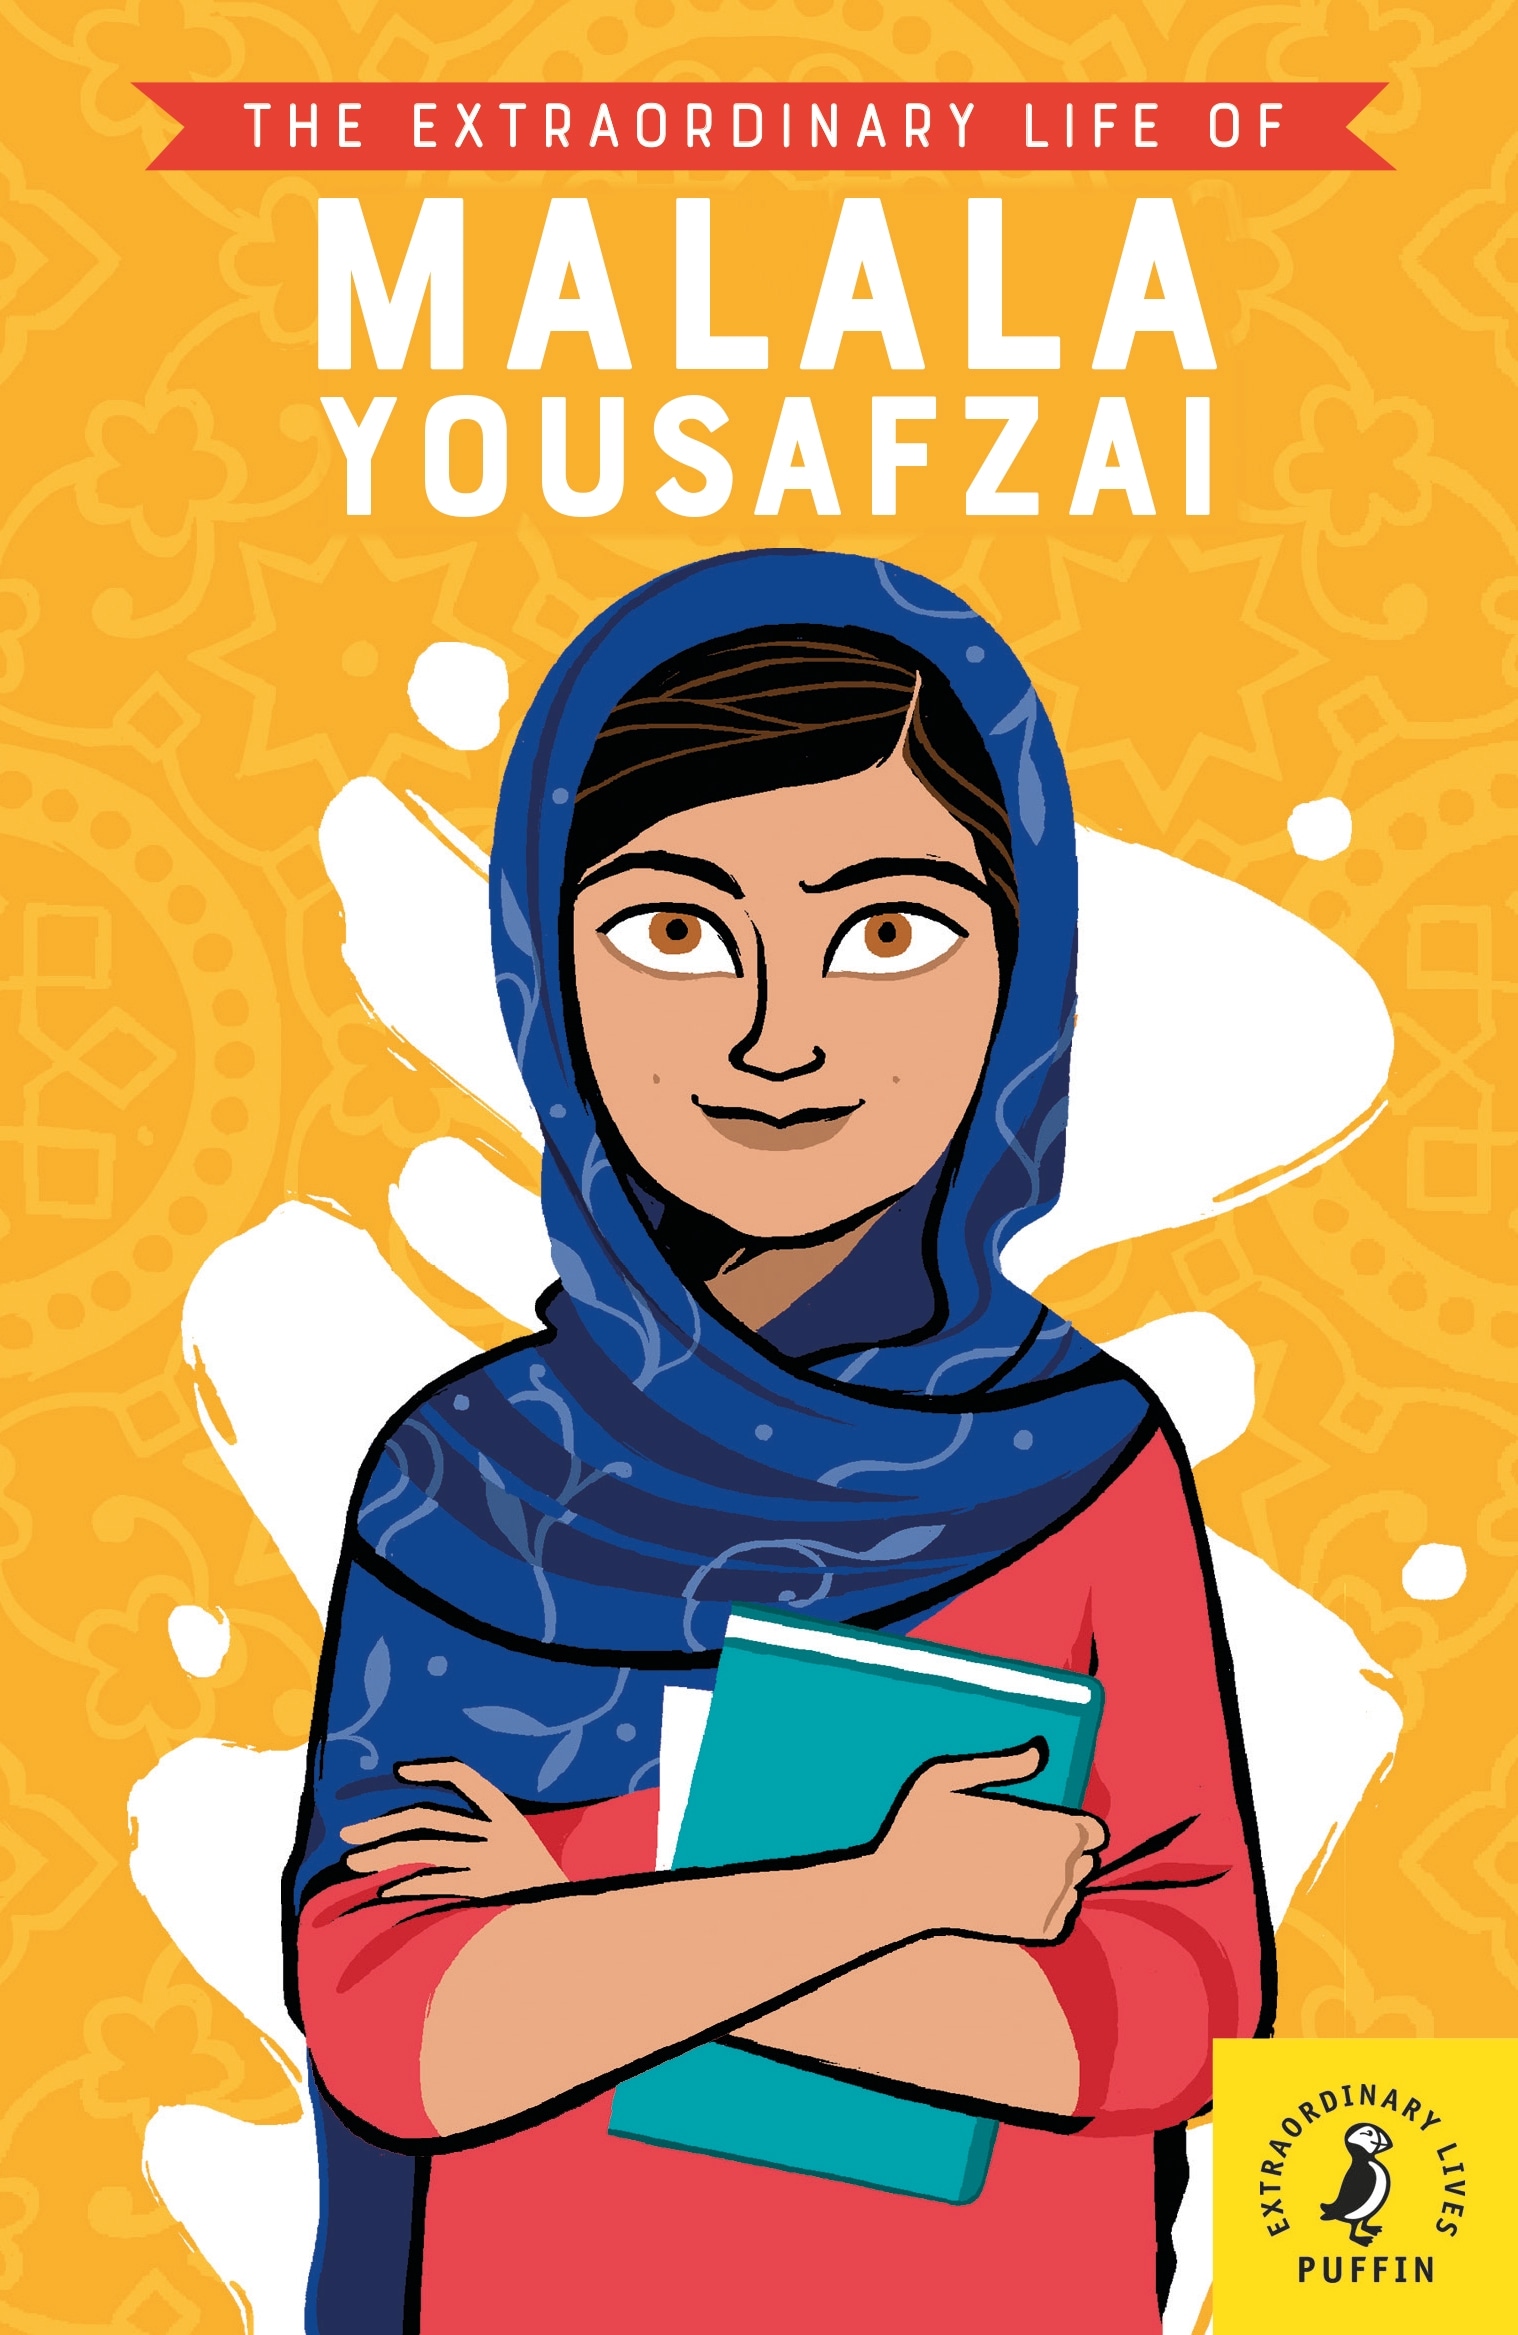 Book “The Extraordinary Life of Malala Yousafzai” by Hiba Noor Khan, Rita Petruccioli — January 10, 2019